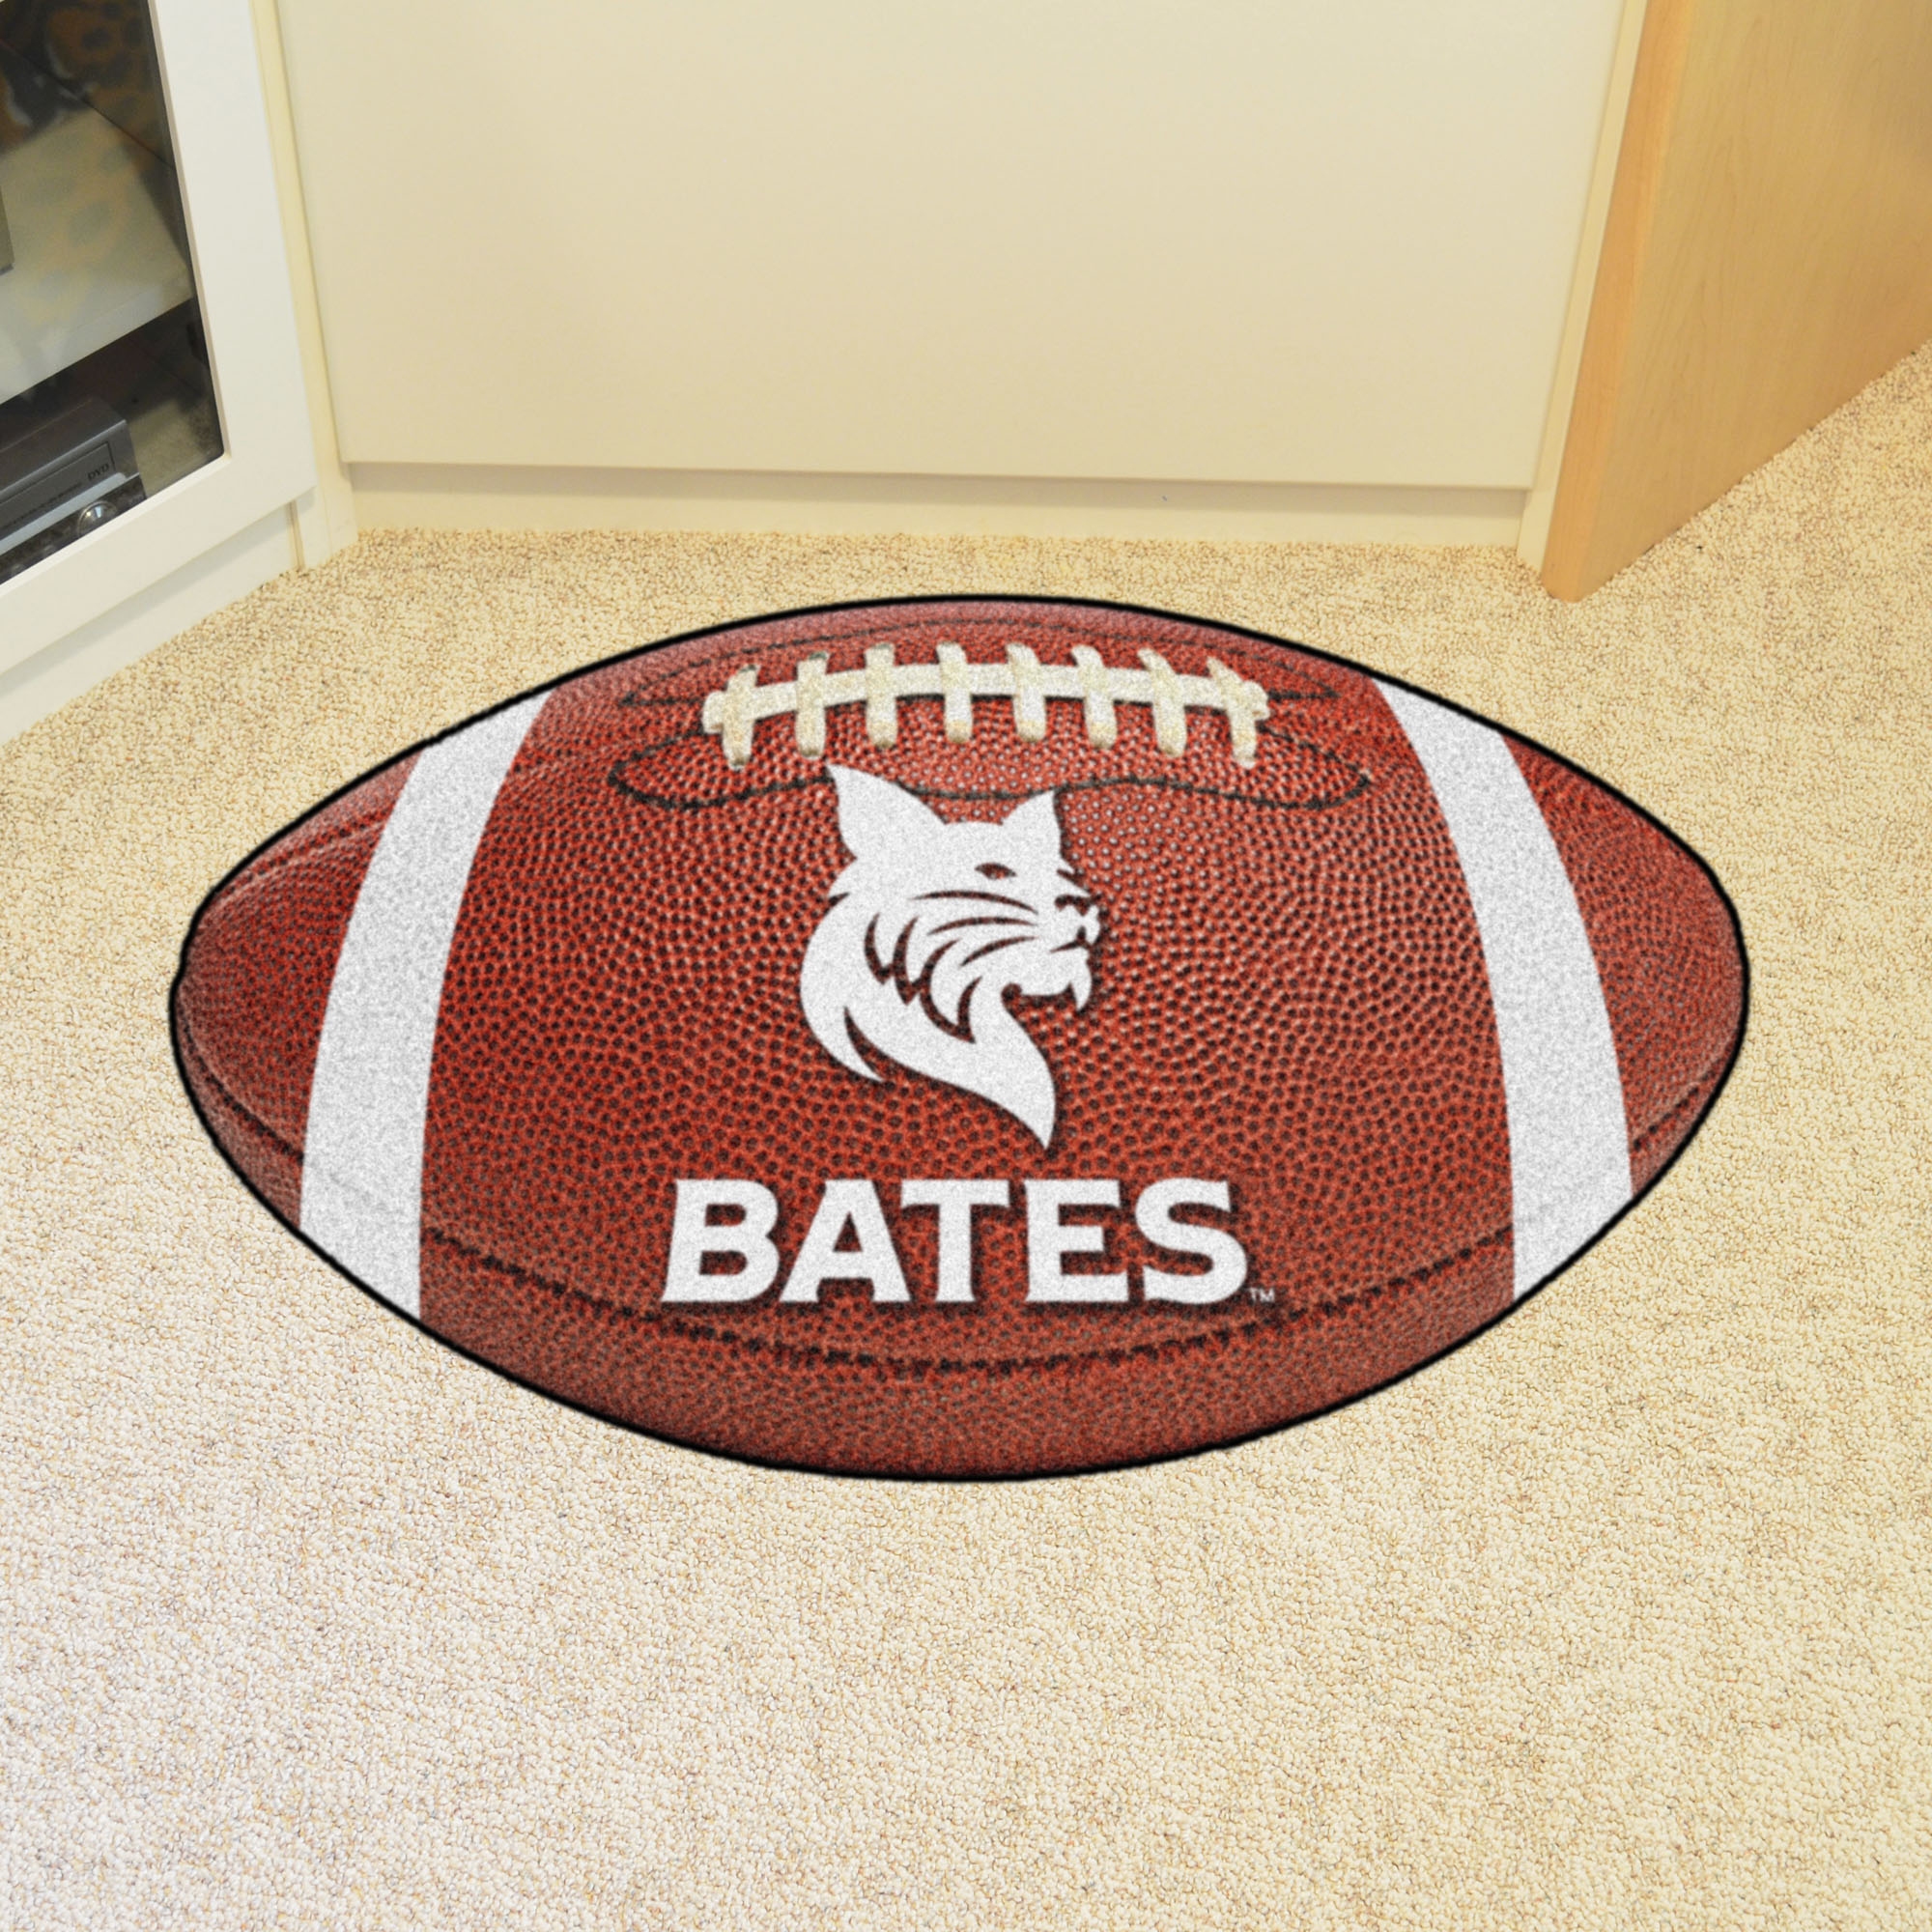 Bates College Ball Shaped Area Rugs (Ball Shaped Area Rugs: Football)